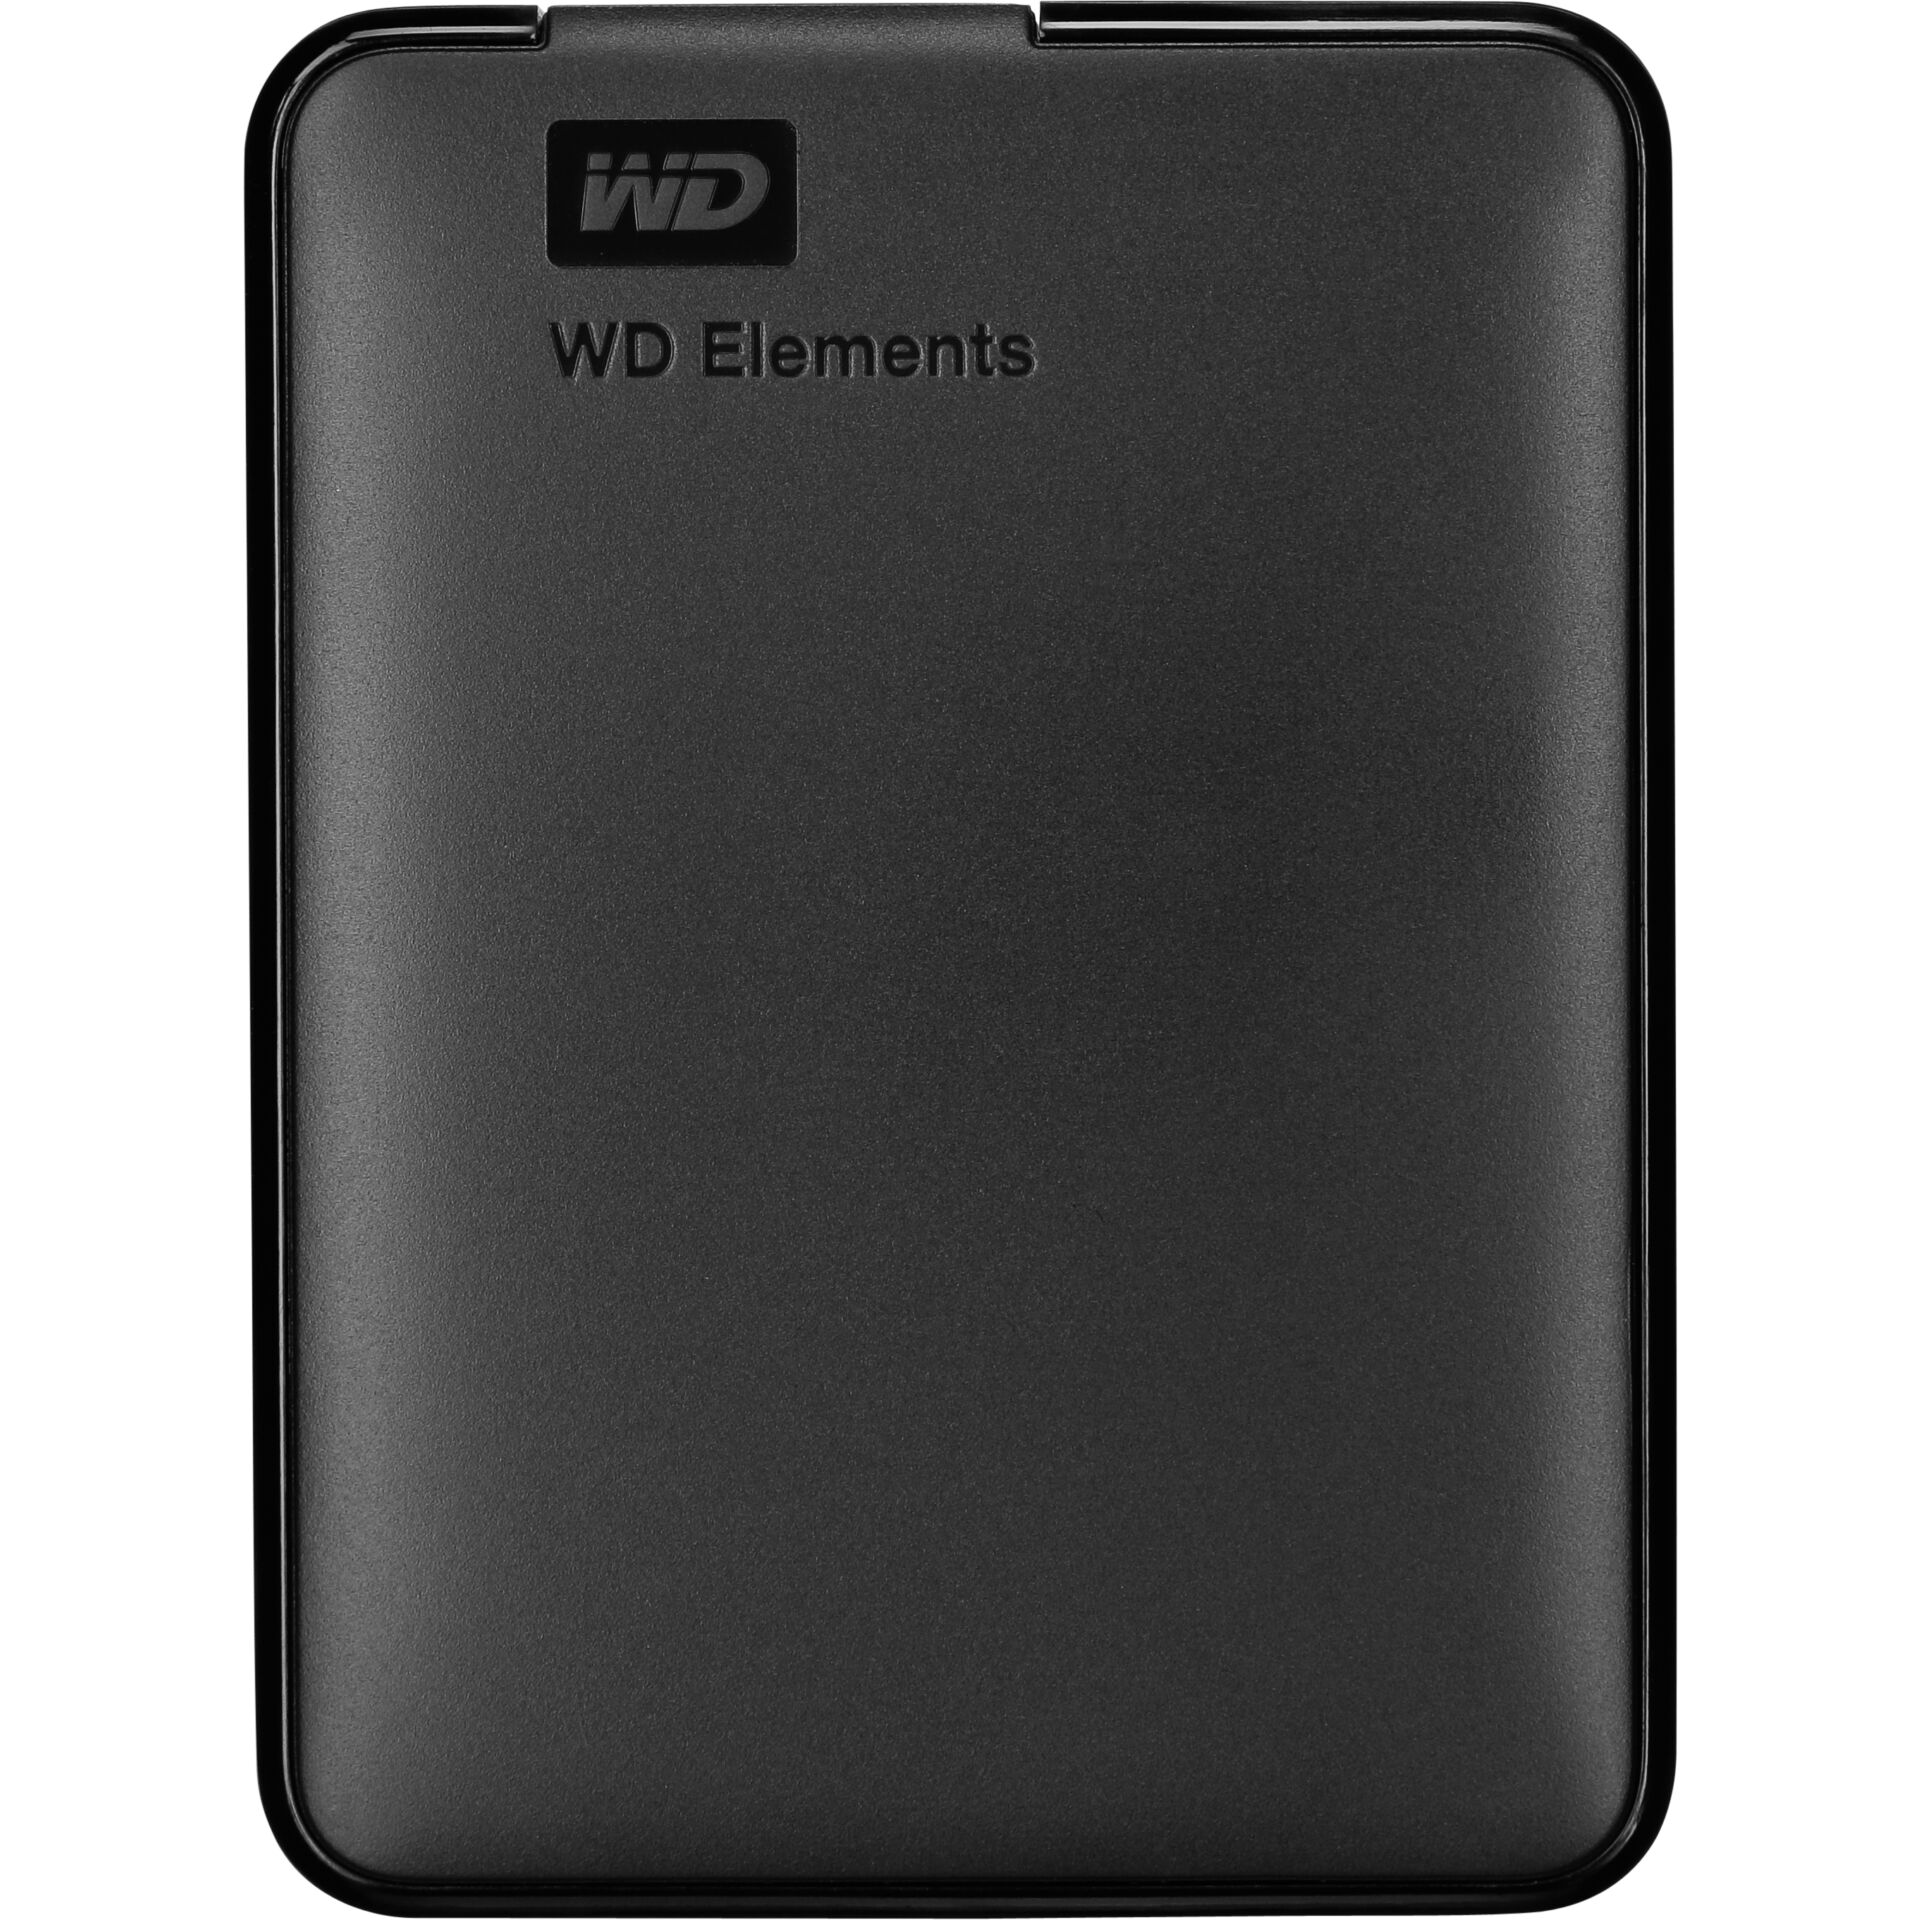 Western elements portable. WD elements Portable 4 TB. WD elements USB3.0 4tb. 4 ТБ внешний HDD WD elements Portable. 1 ТБ внешний HDD WD elements Portable.